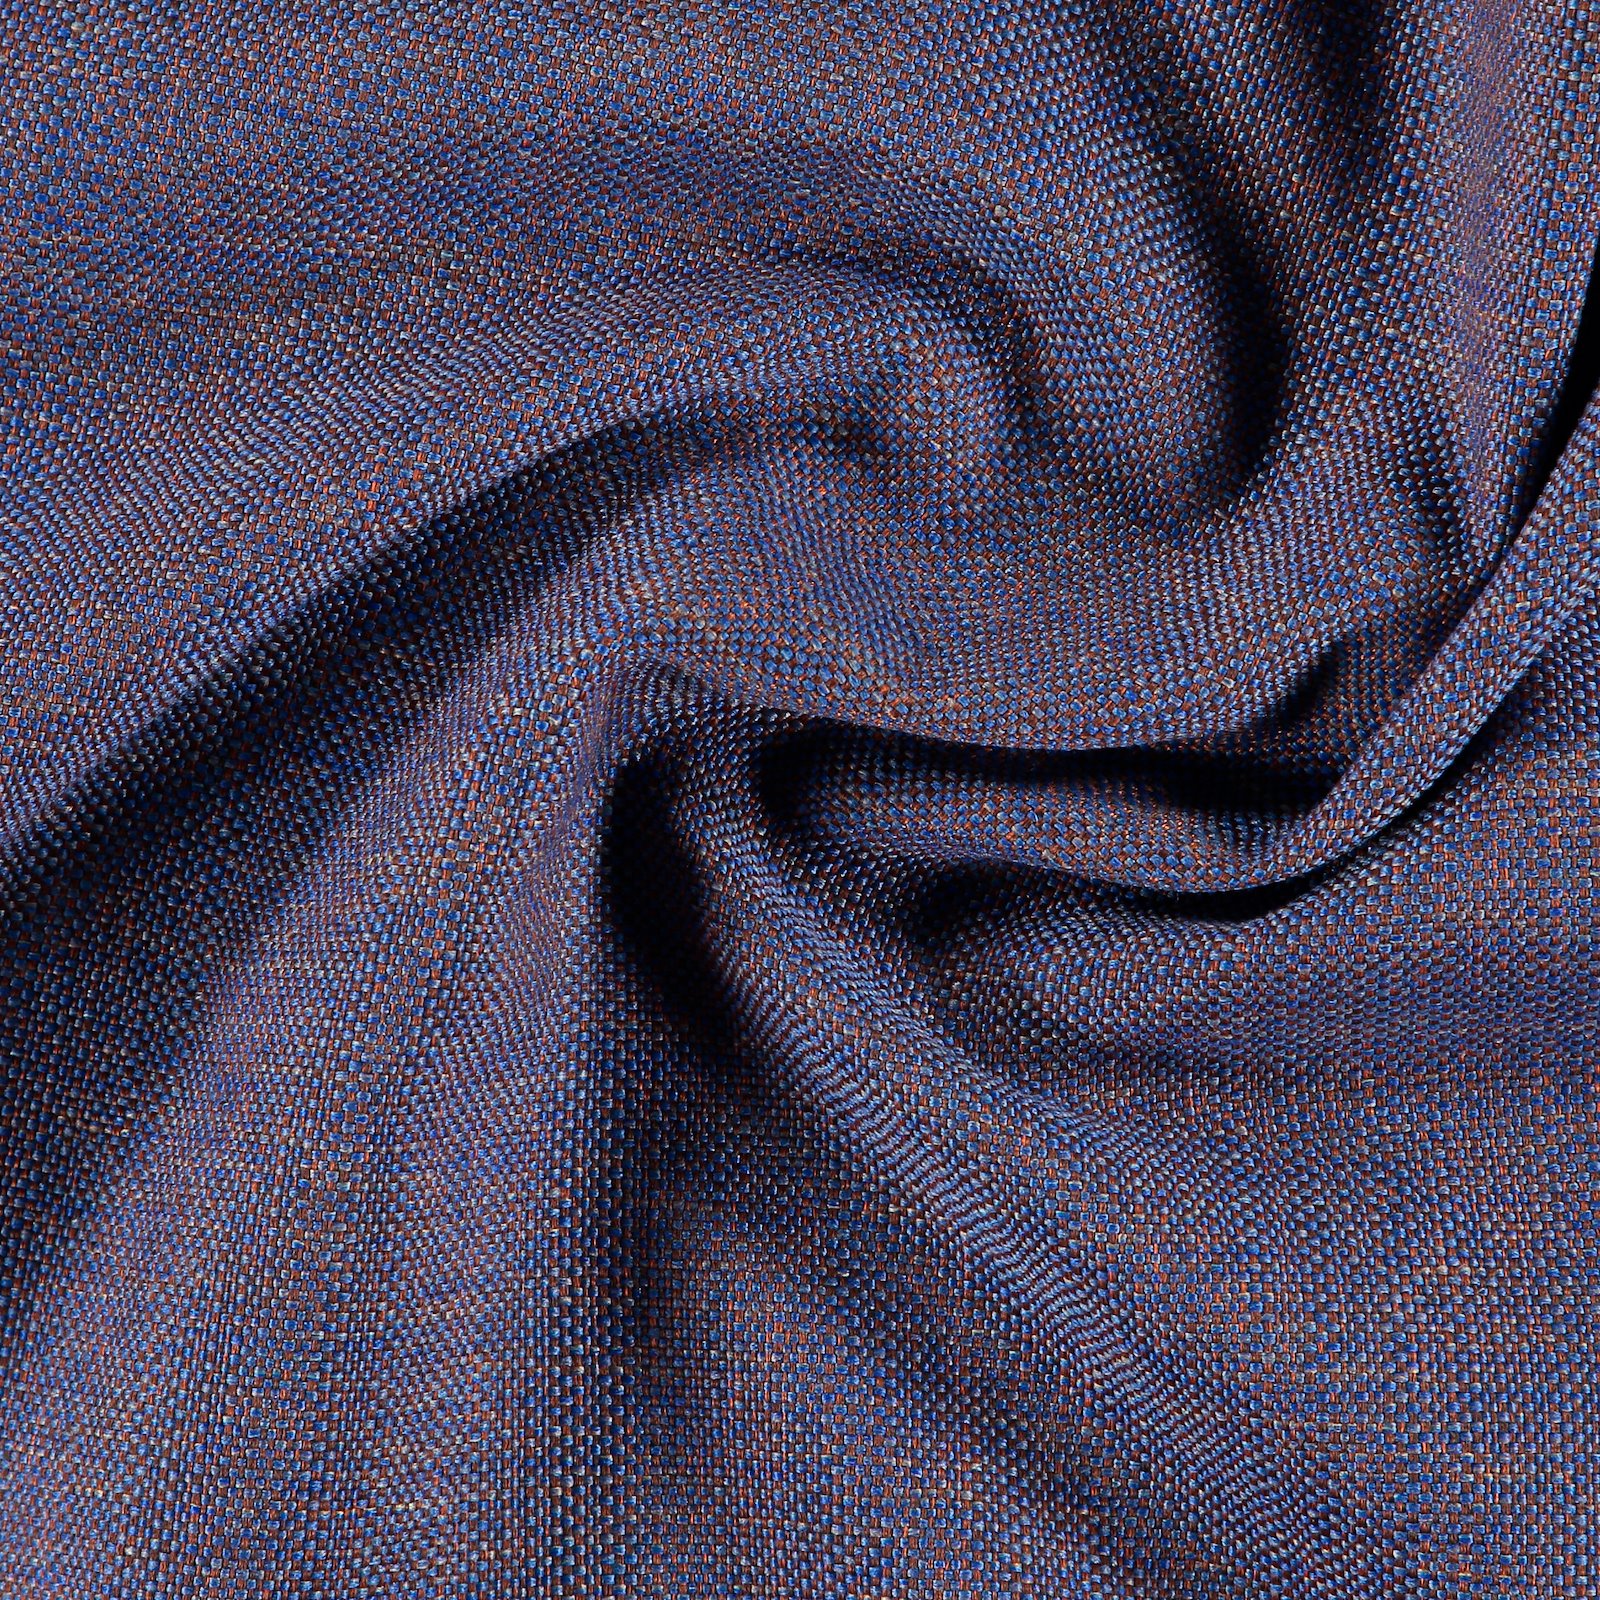 Upholstery fabric cobalt blue/caramel 824156_pack